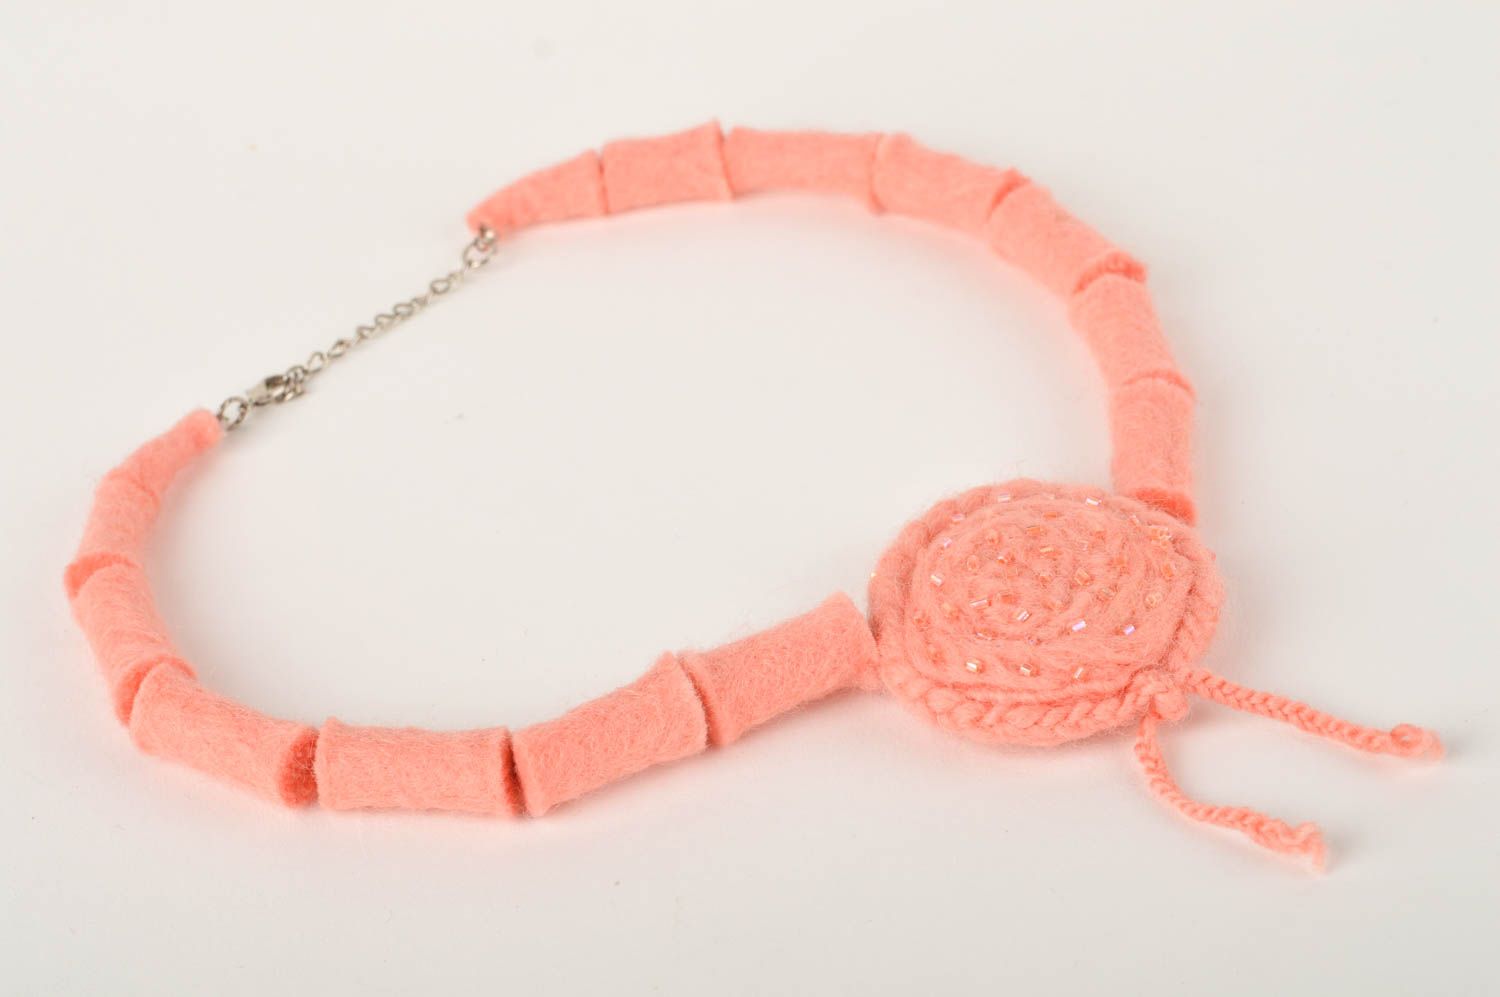 Handmade necklace designer woolen necklace for women gift ideas unusual jewelry photo 2